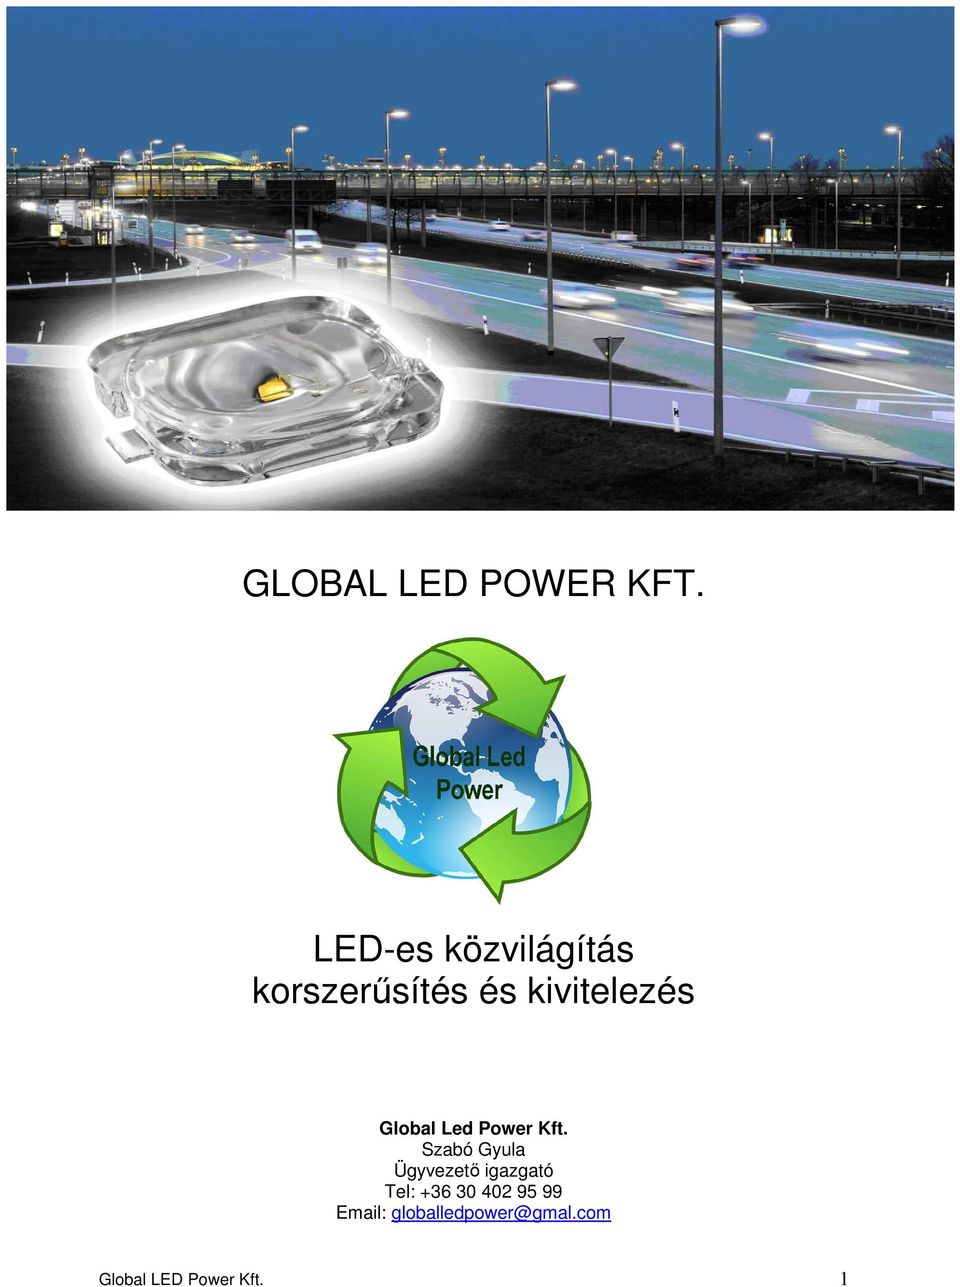 Global Led Power Kft.